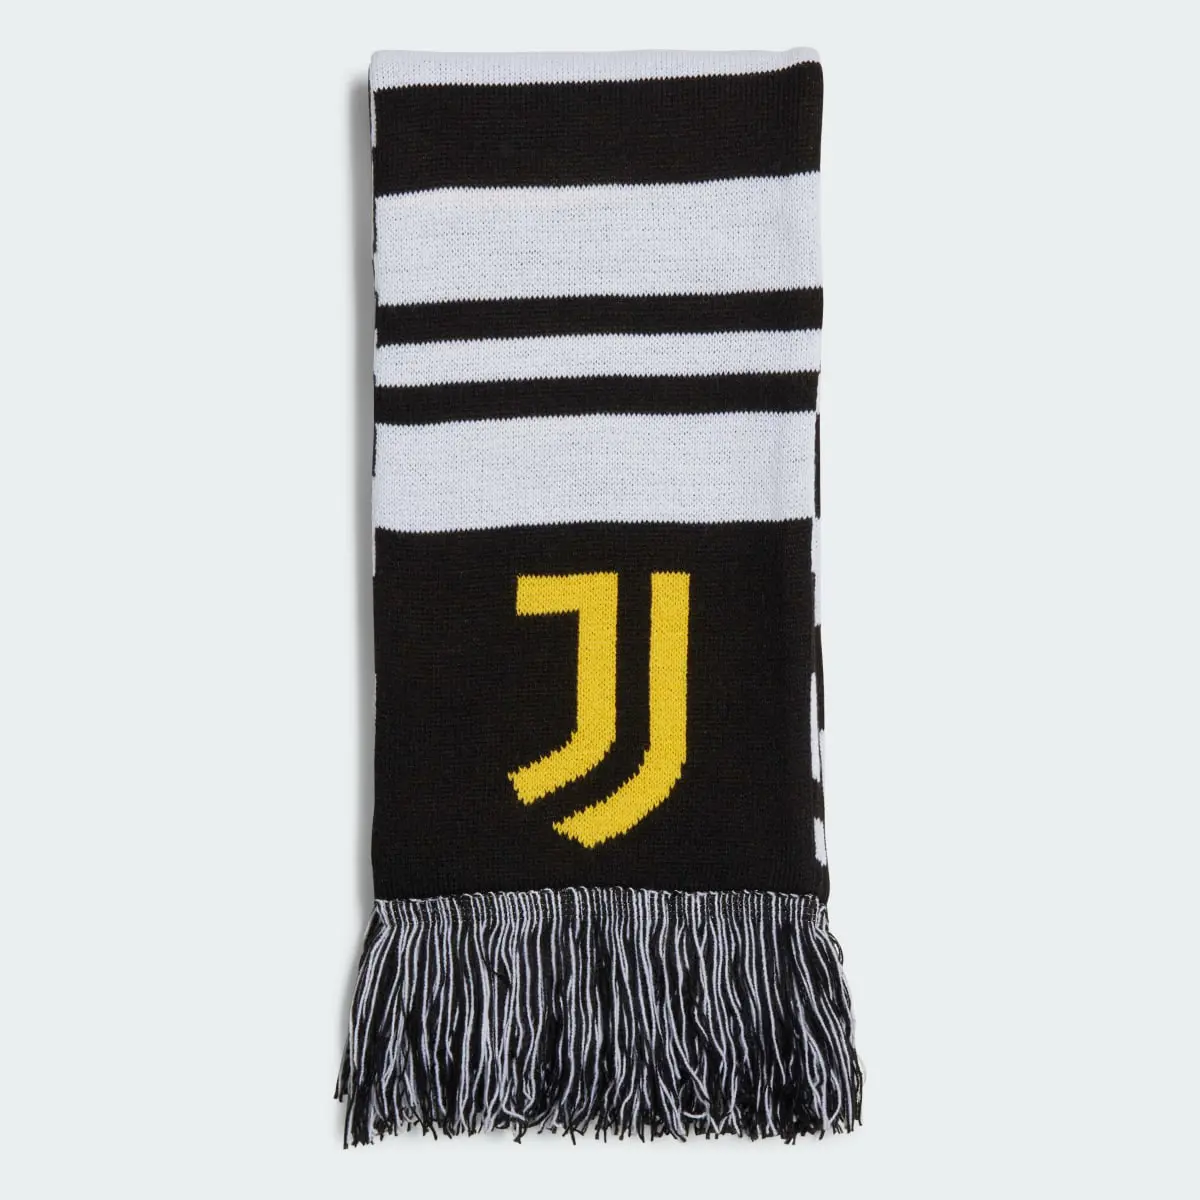 Adidas Juventus Turin Schal. 1